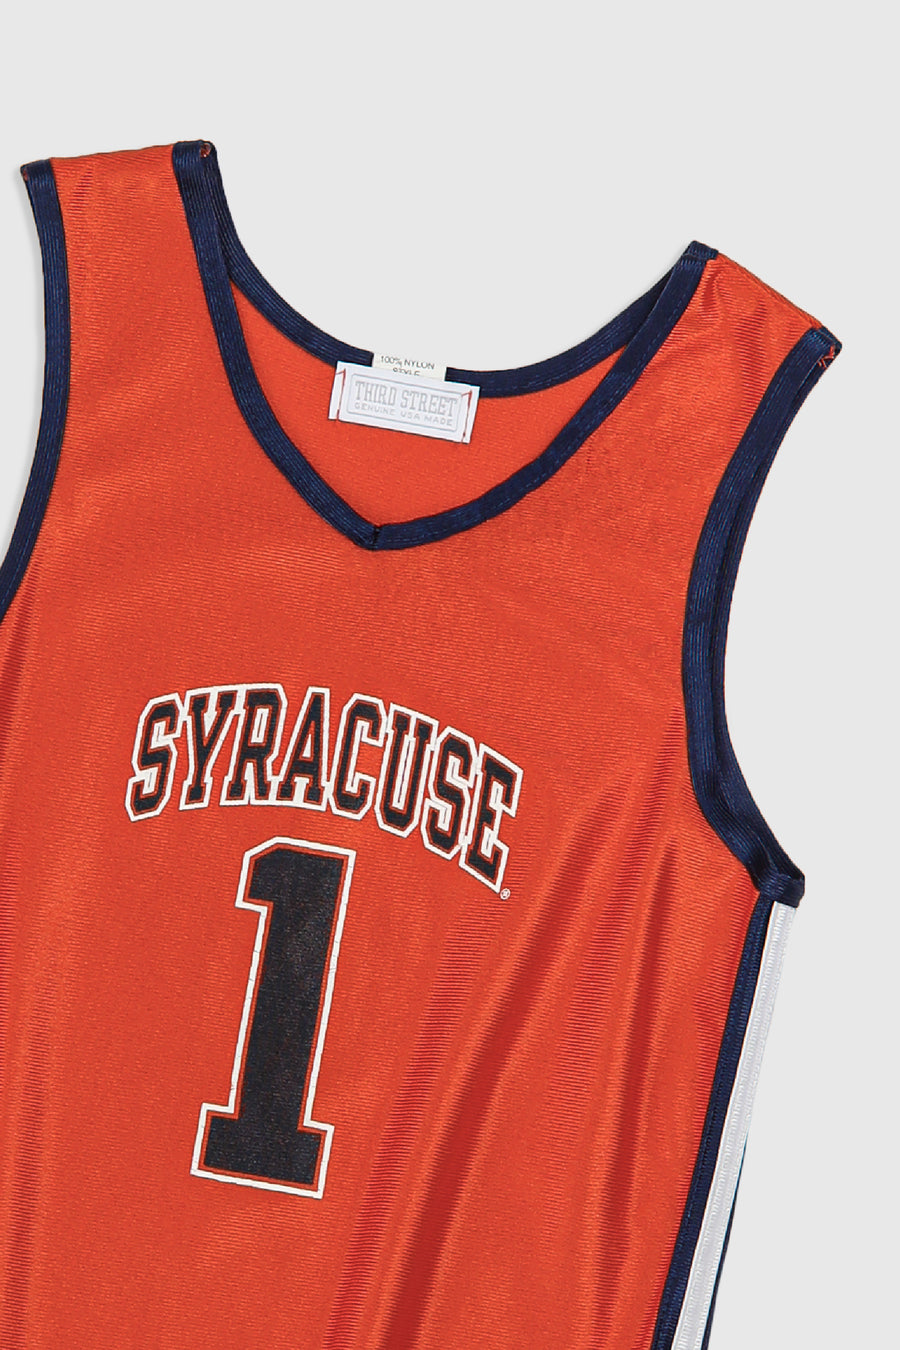 Vintage Syracuse Jersey - XS